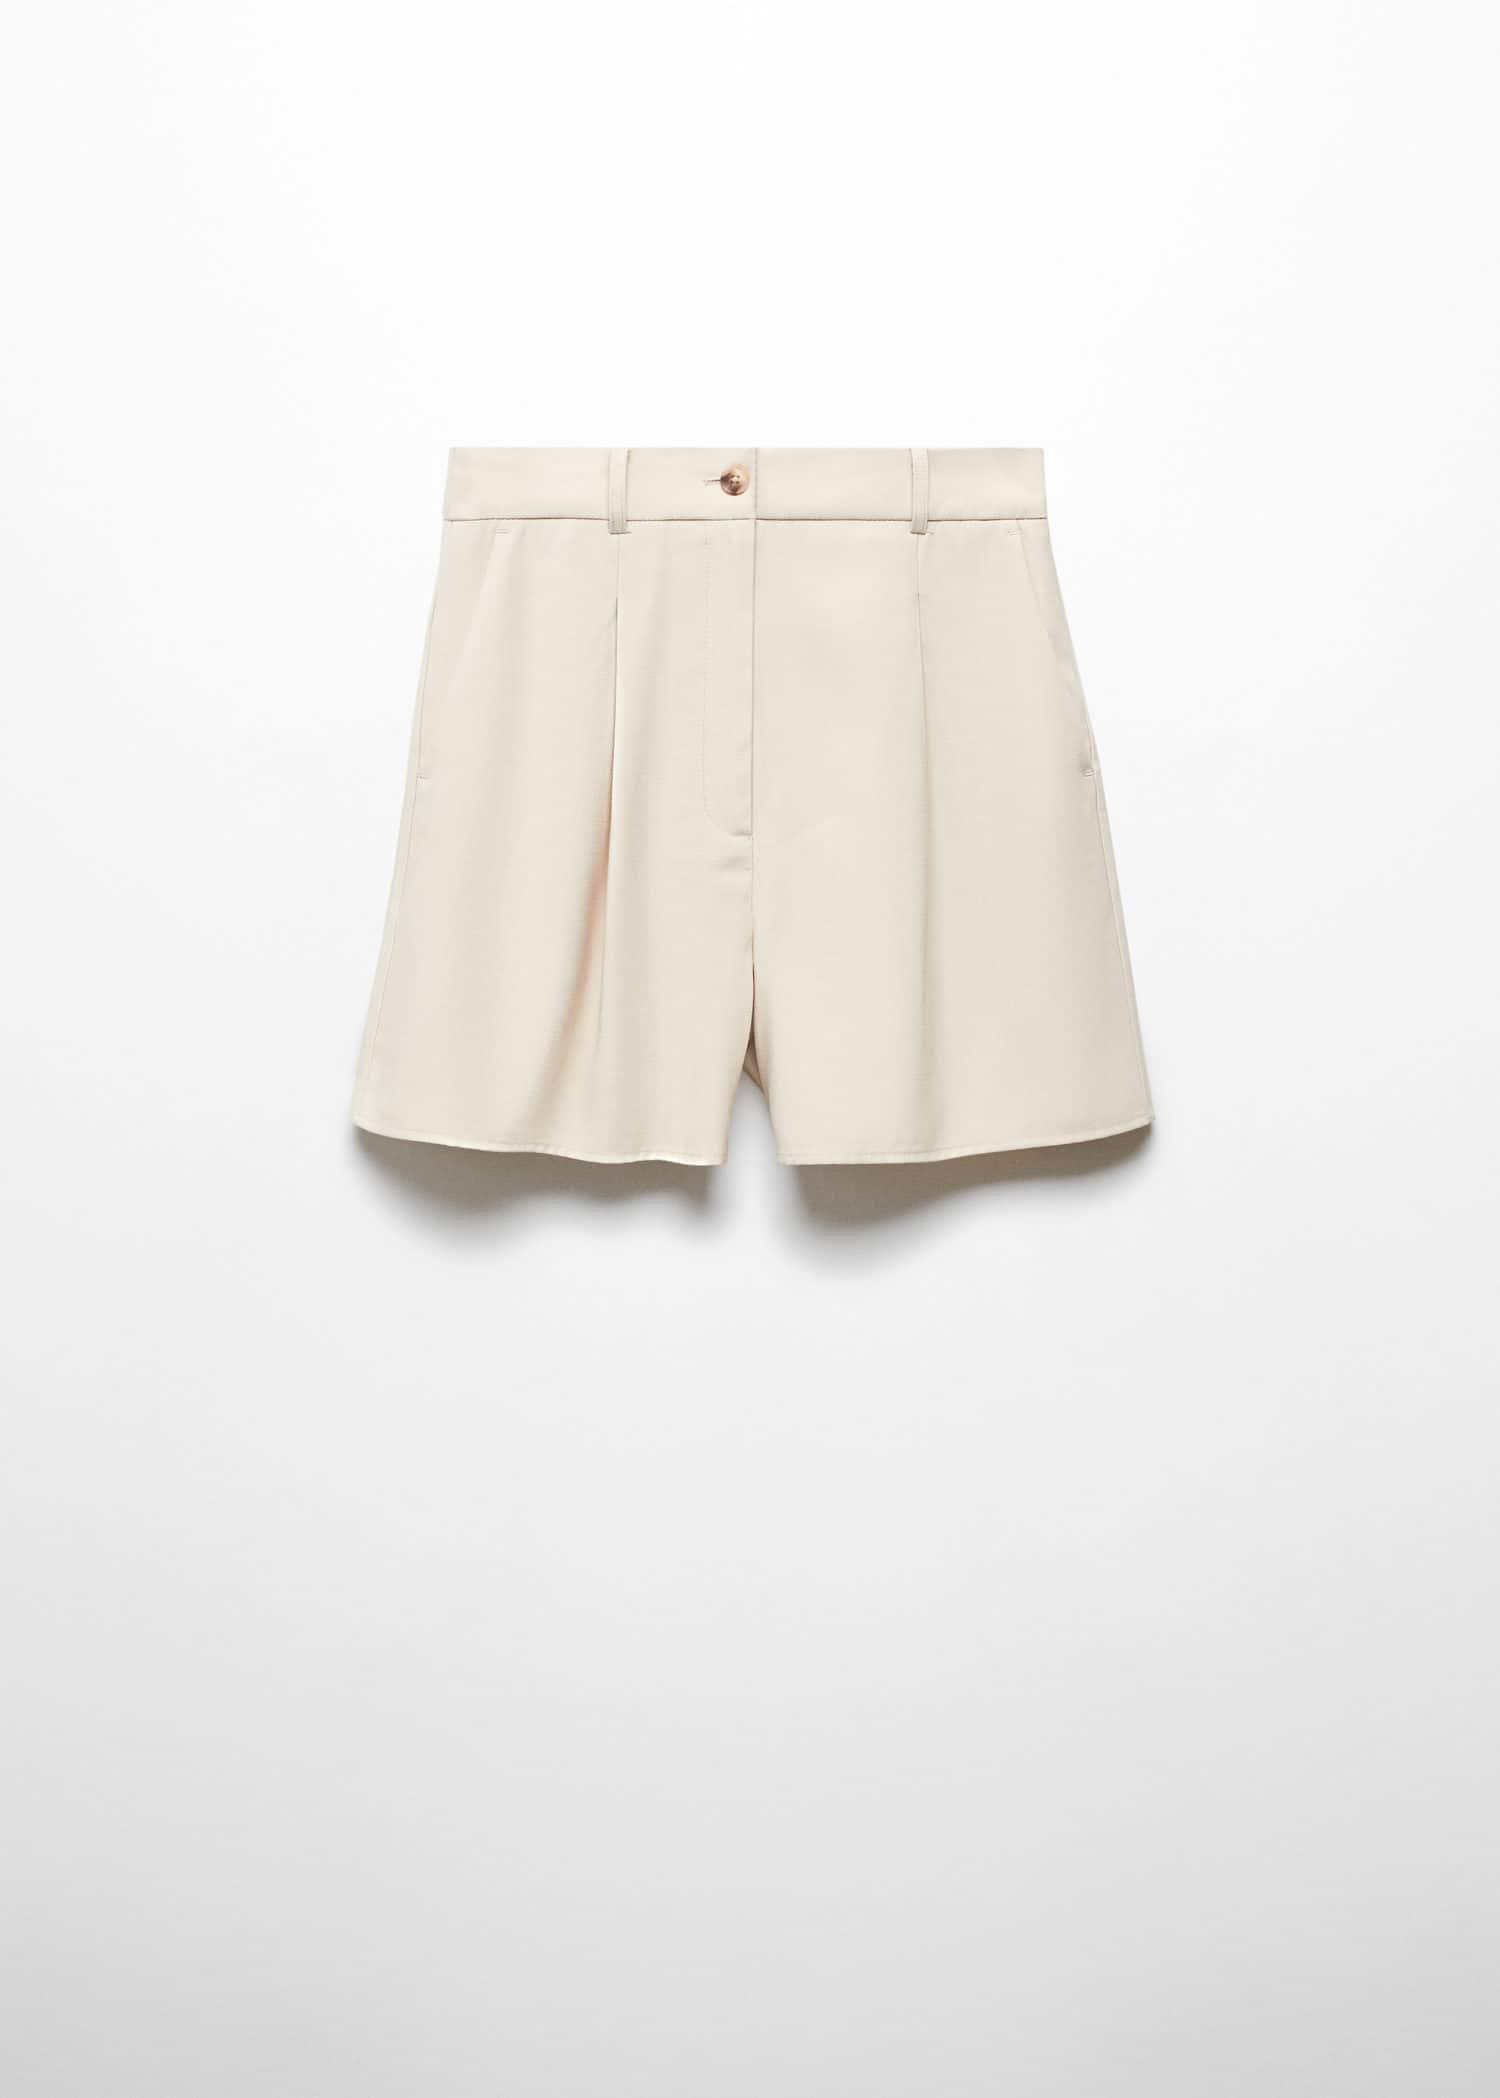 Mango - Beige Pleated High-Waist Shorts